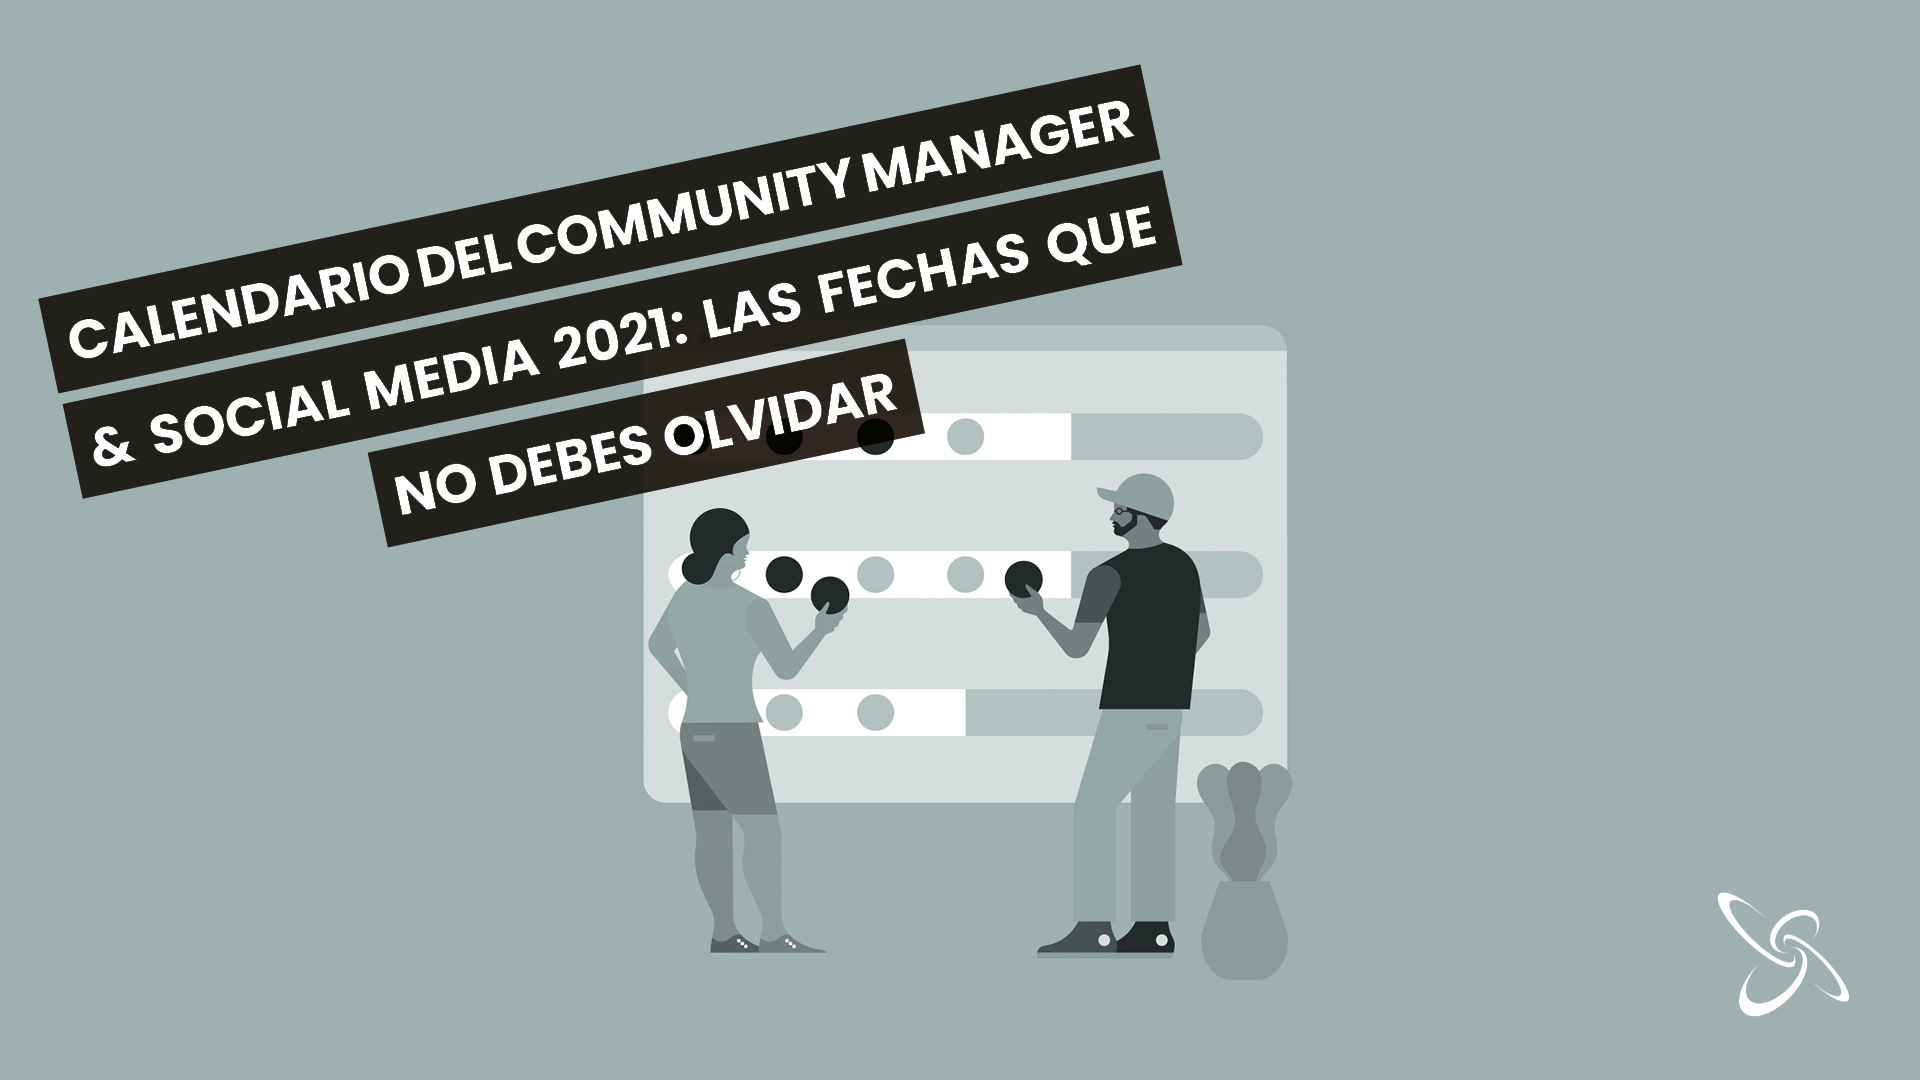 Community Manager & Social Media Calendar 2021: save the dates